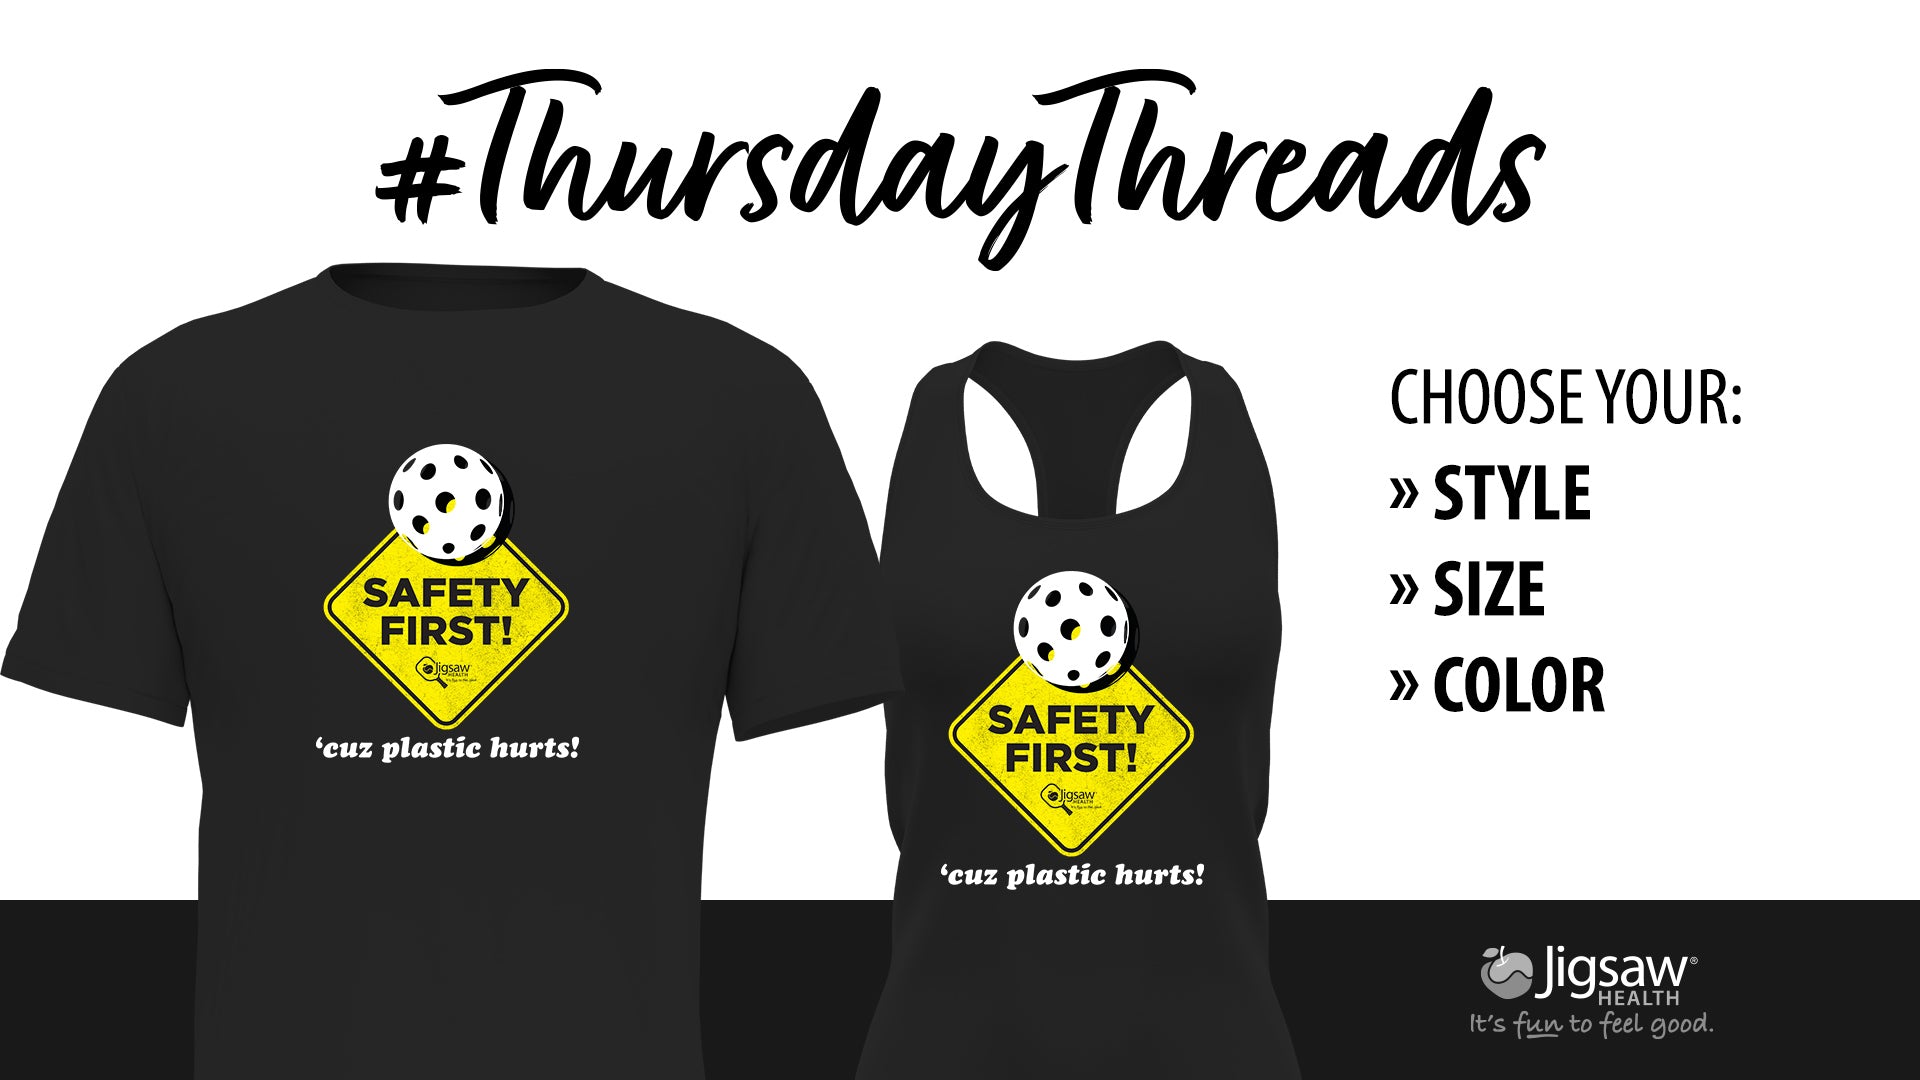 Safety First | #ThursdayThreads